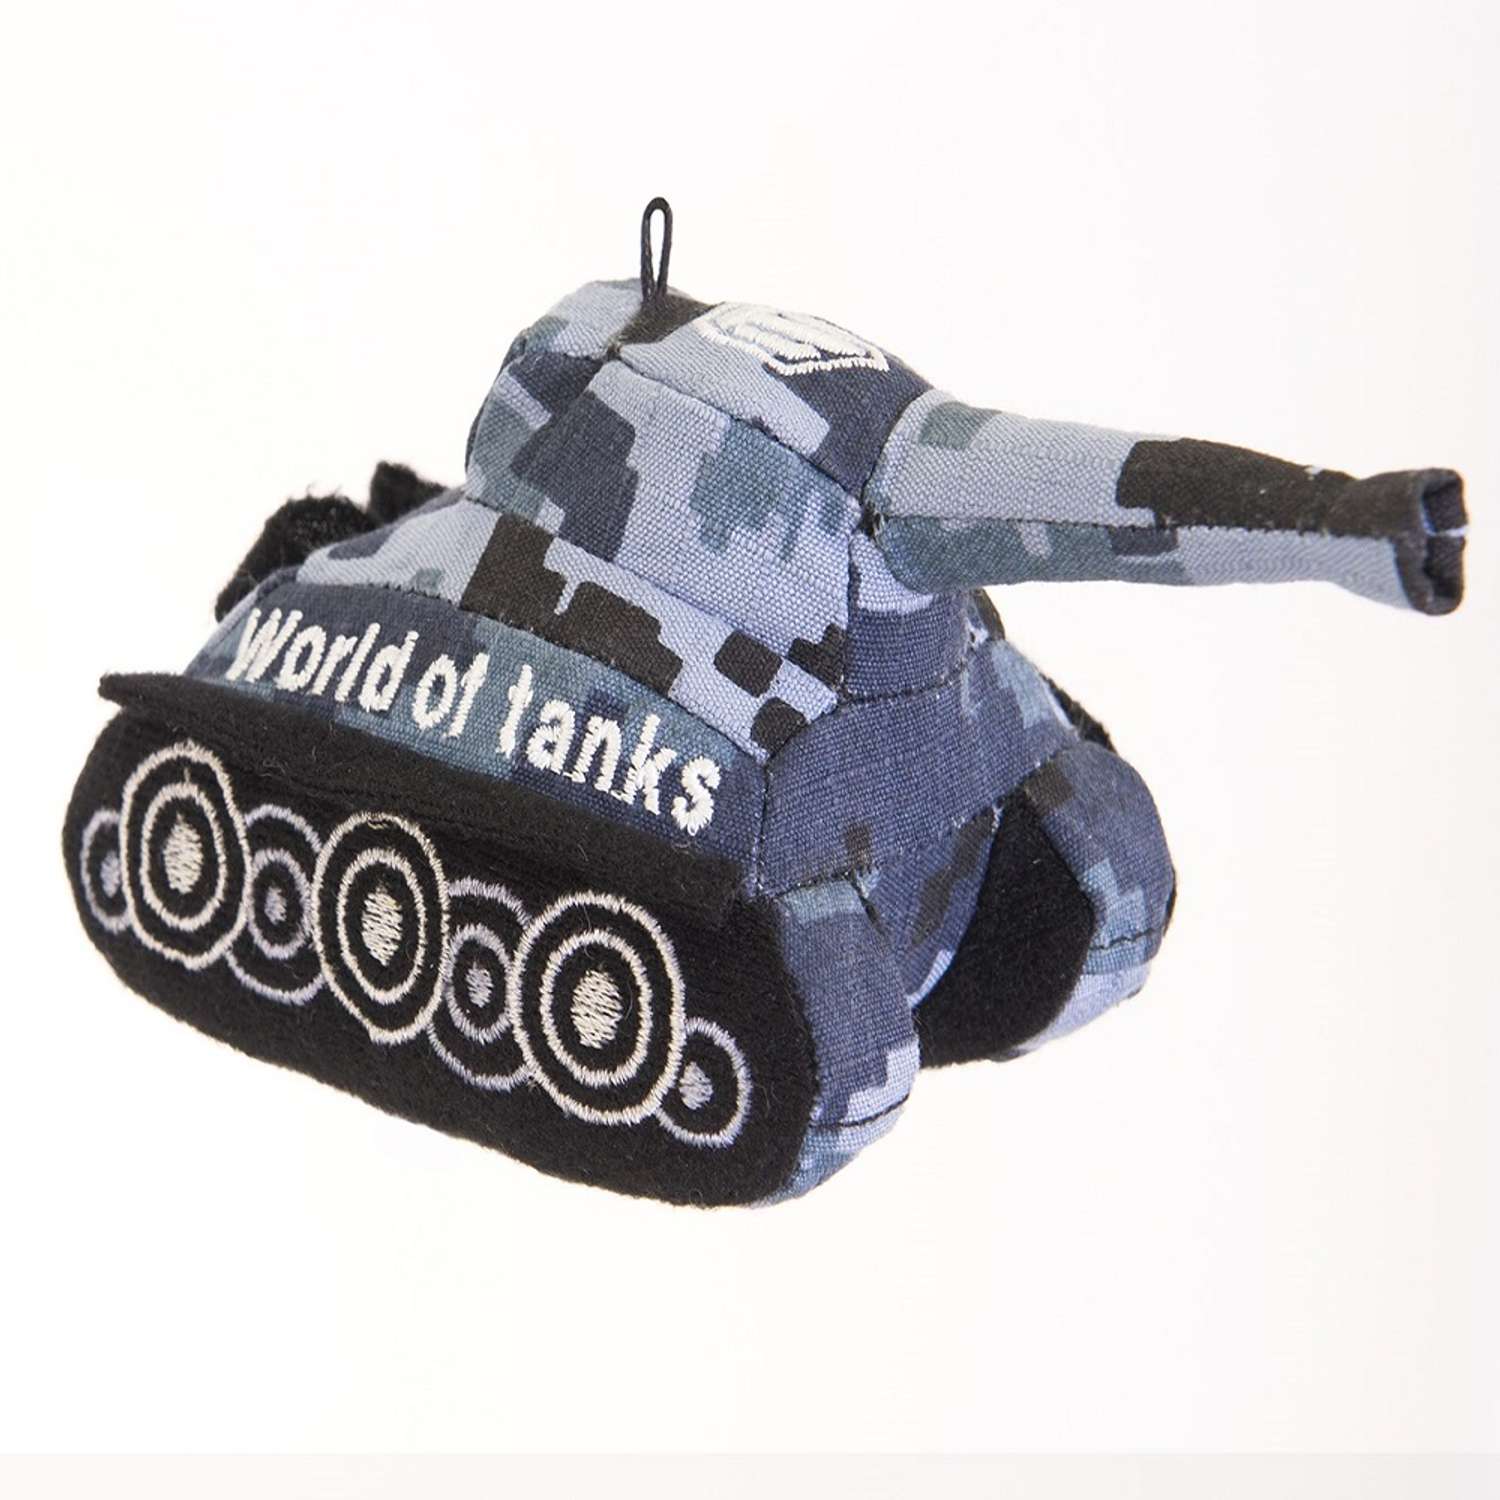 Мягкая игрушка World of Tanks в виде танка серый хаки - фото 1